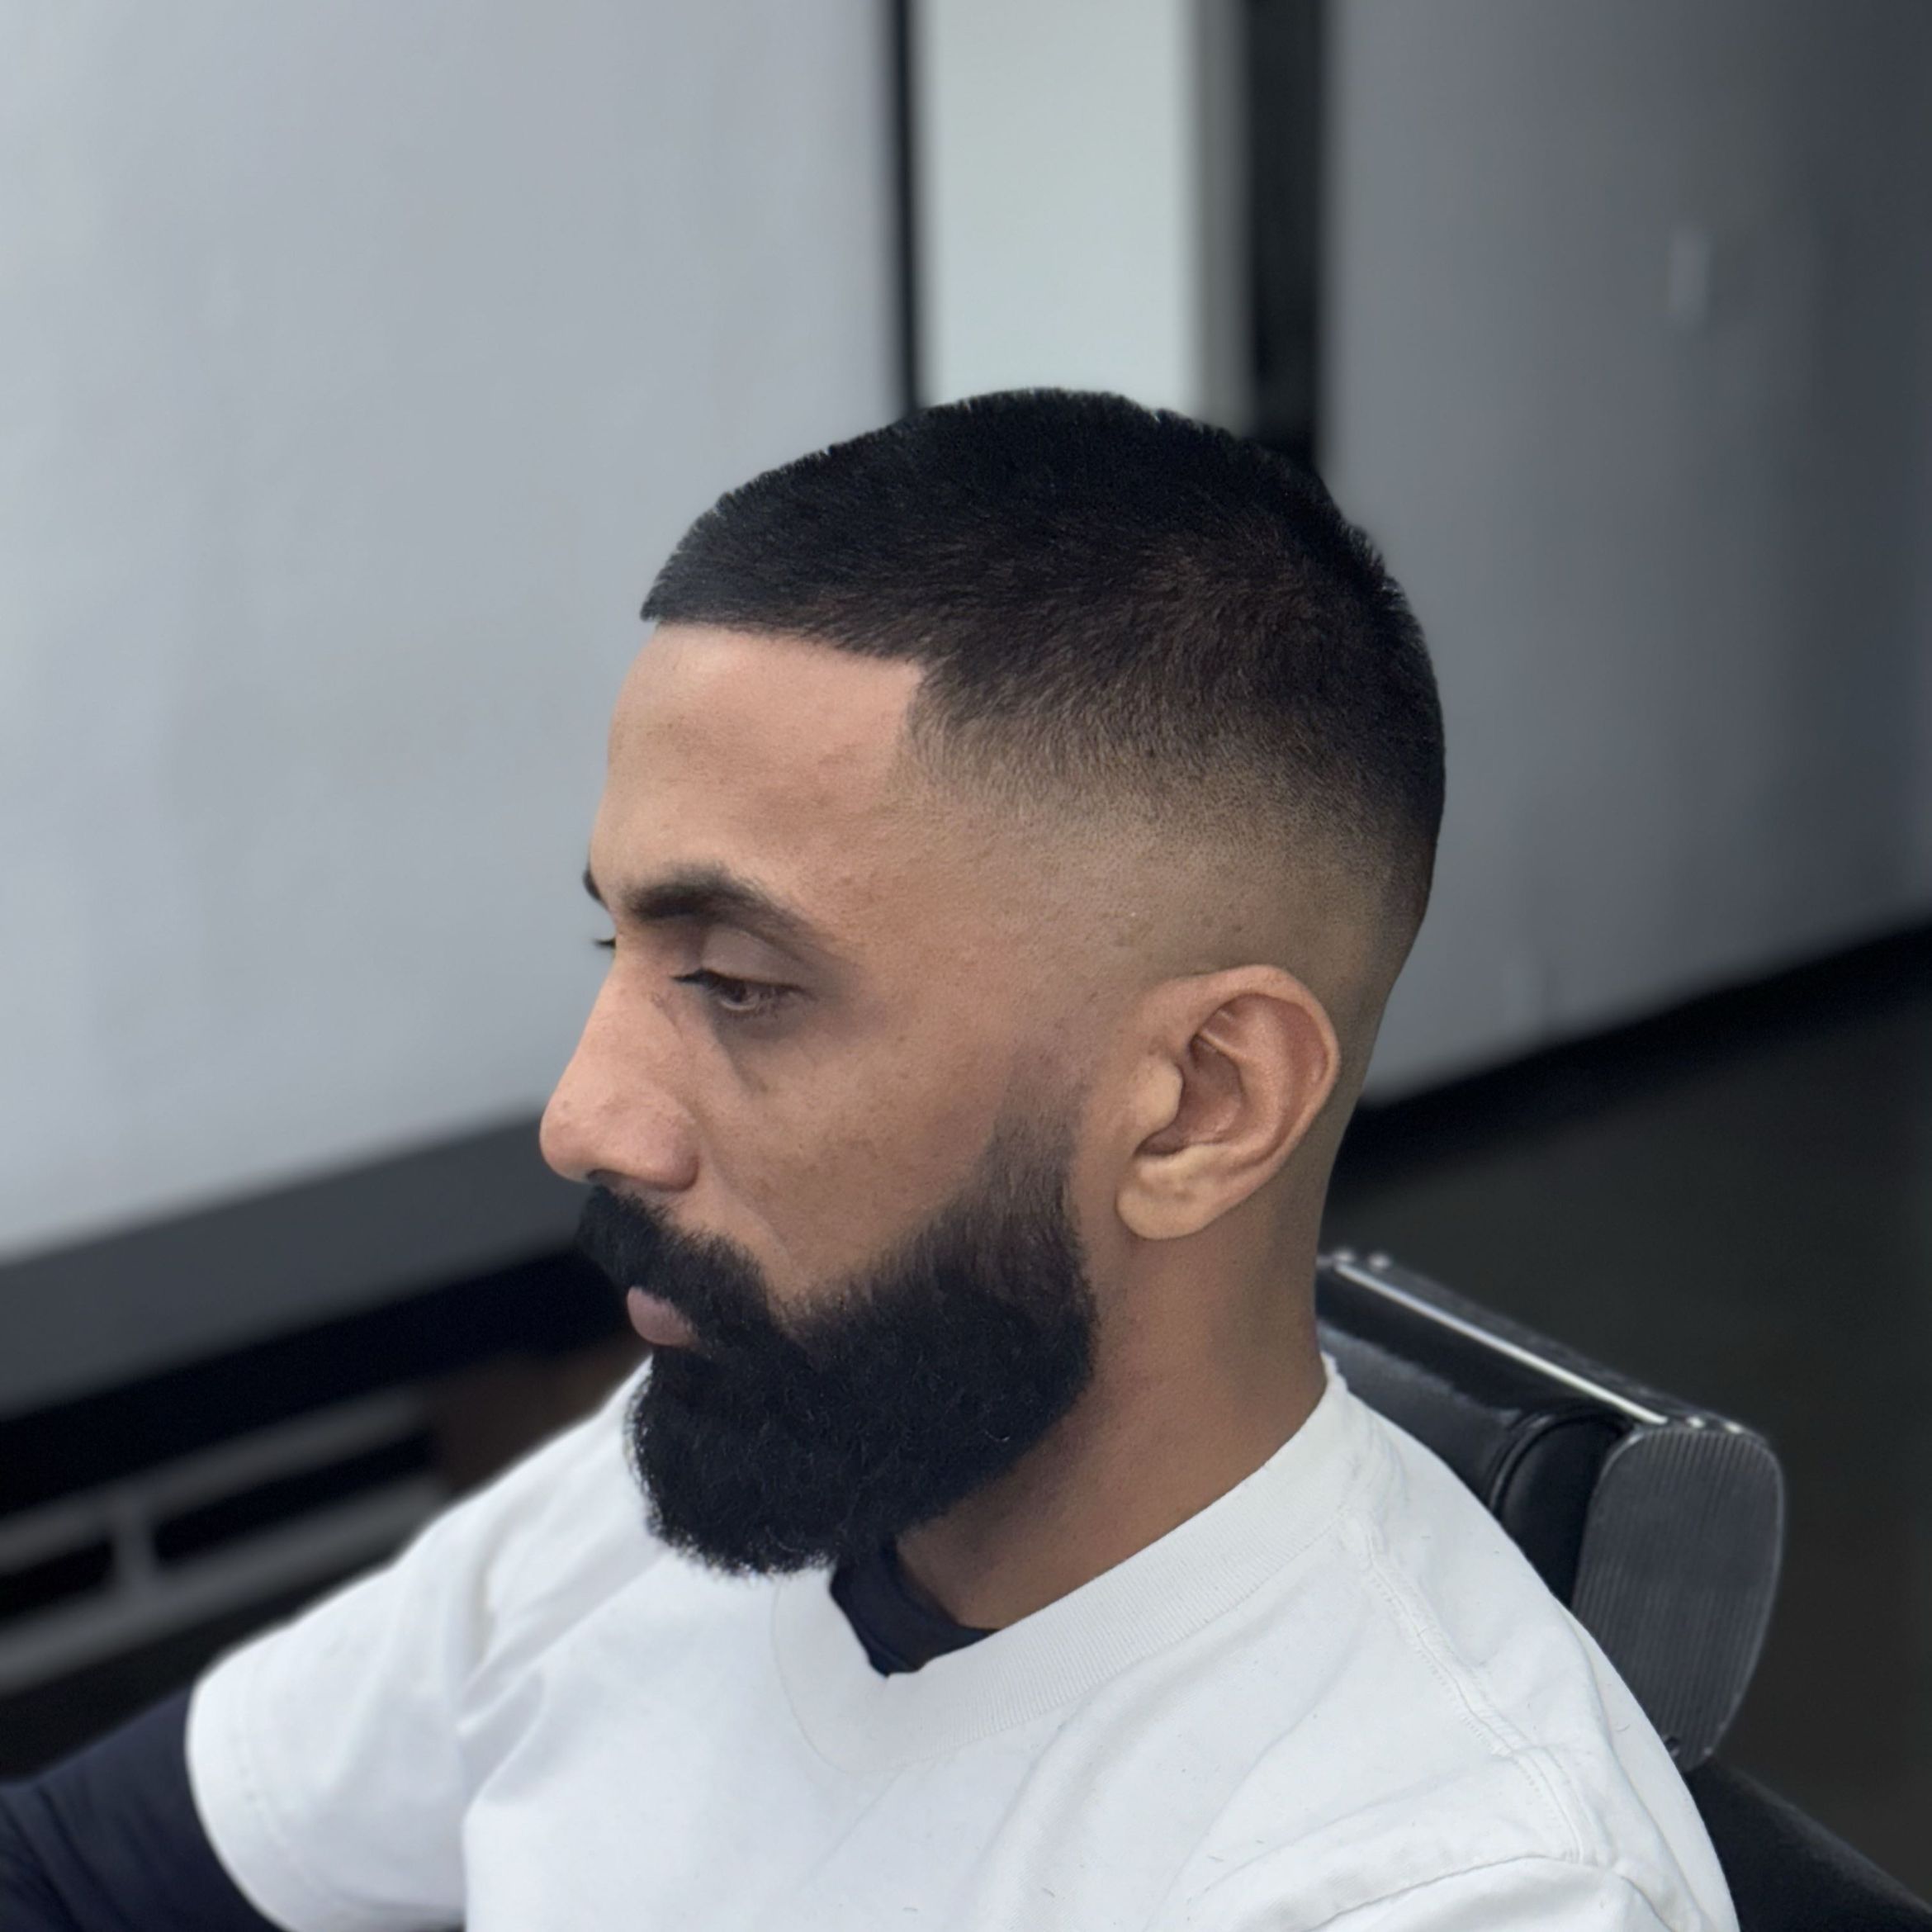 Haircut + Beard Trim/Line up portfolio